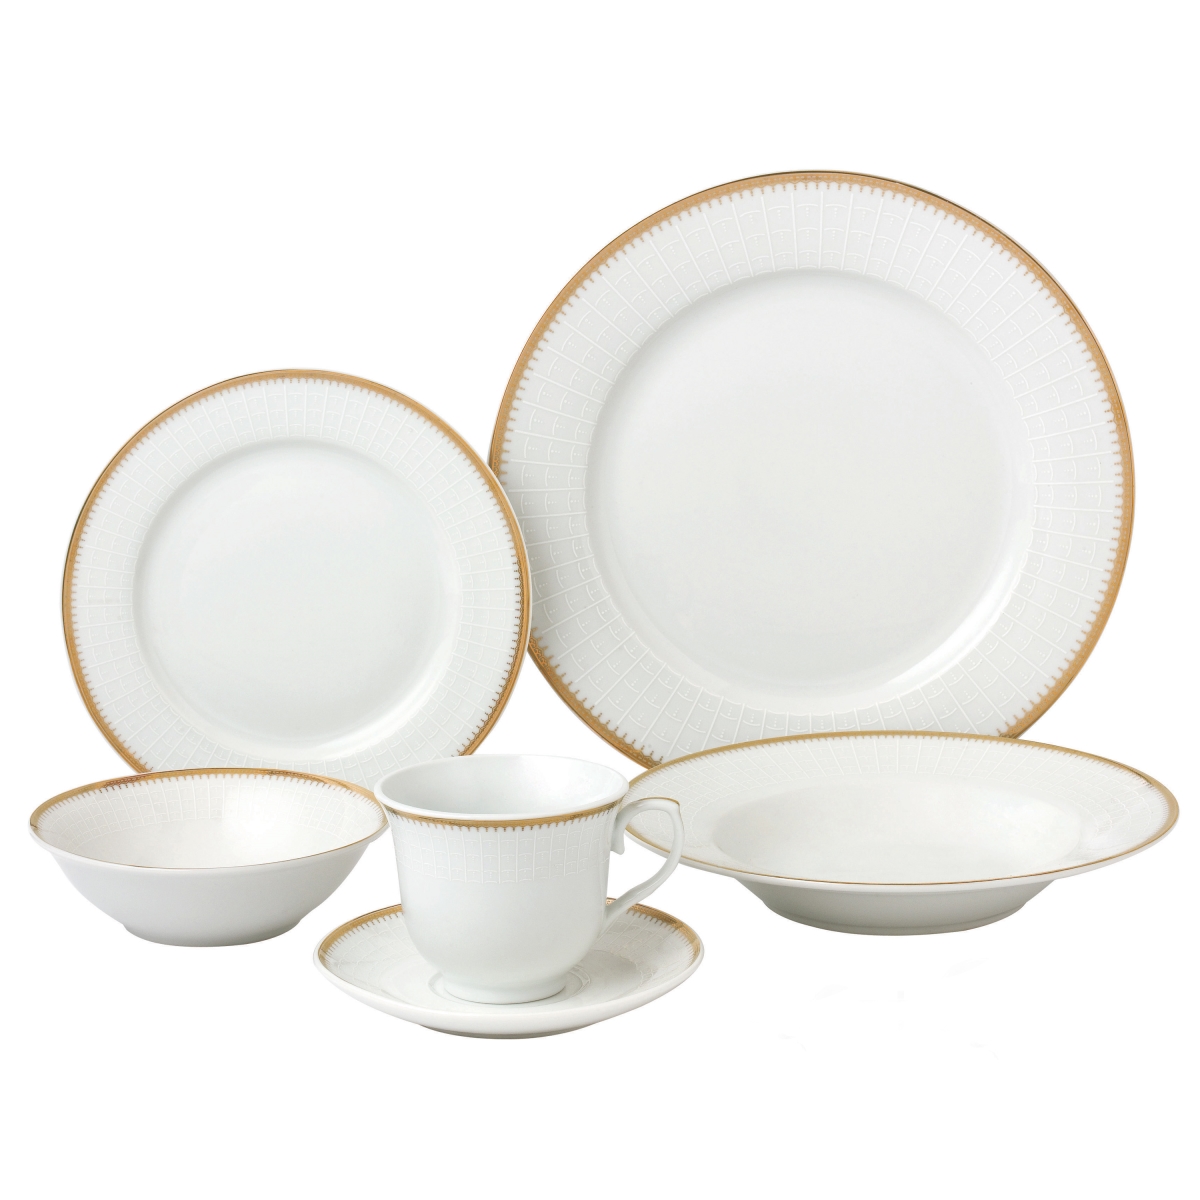 Lh432 24 Piece Porcelain Dinnerware Service, Gold - For 4 Georgette